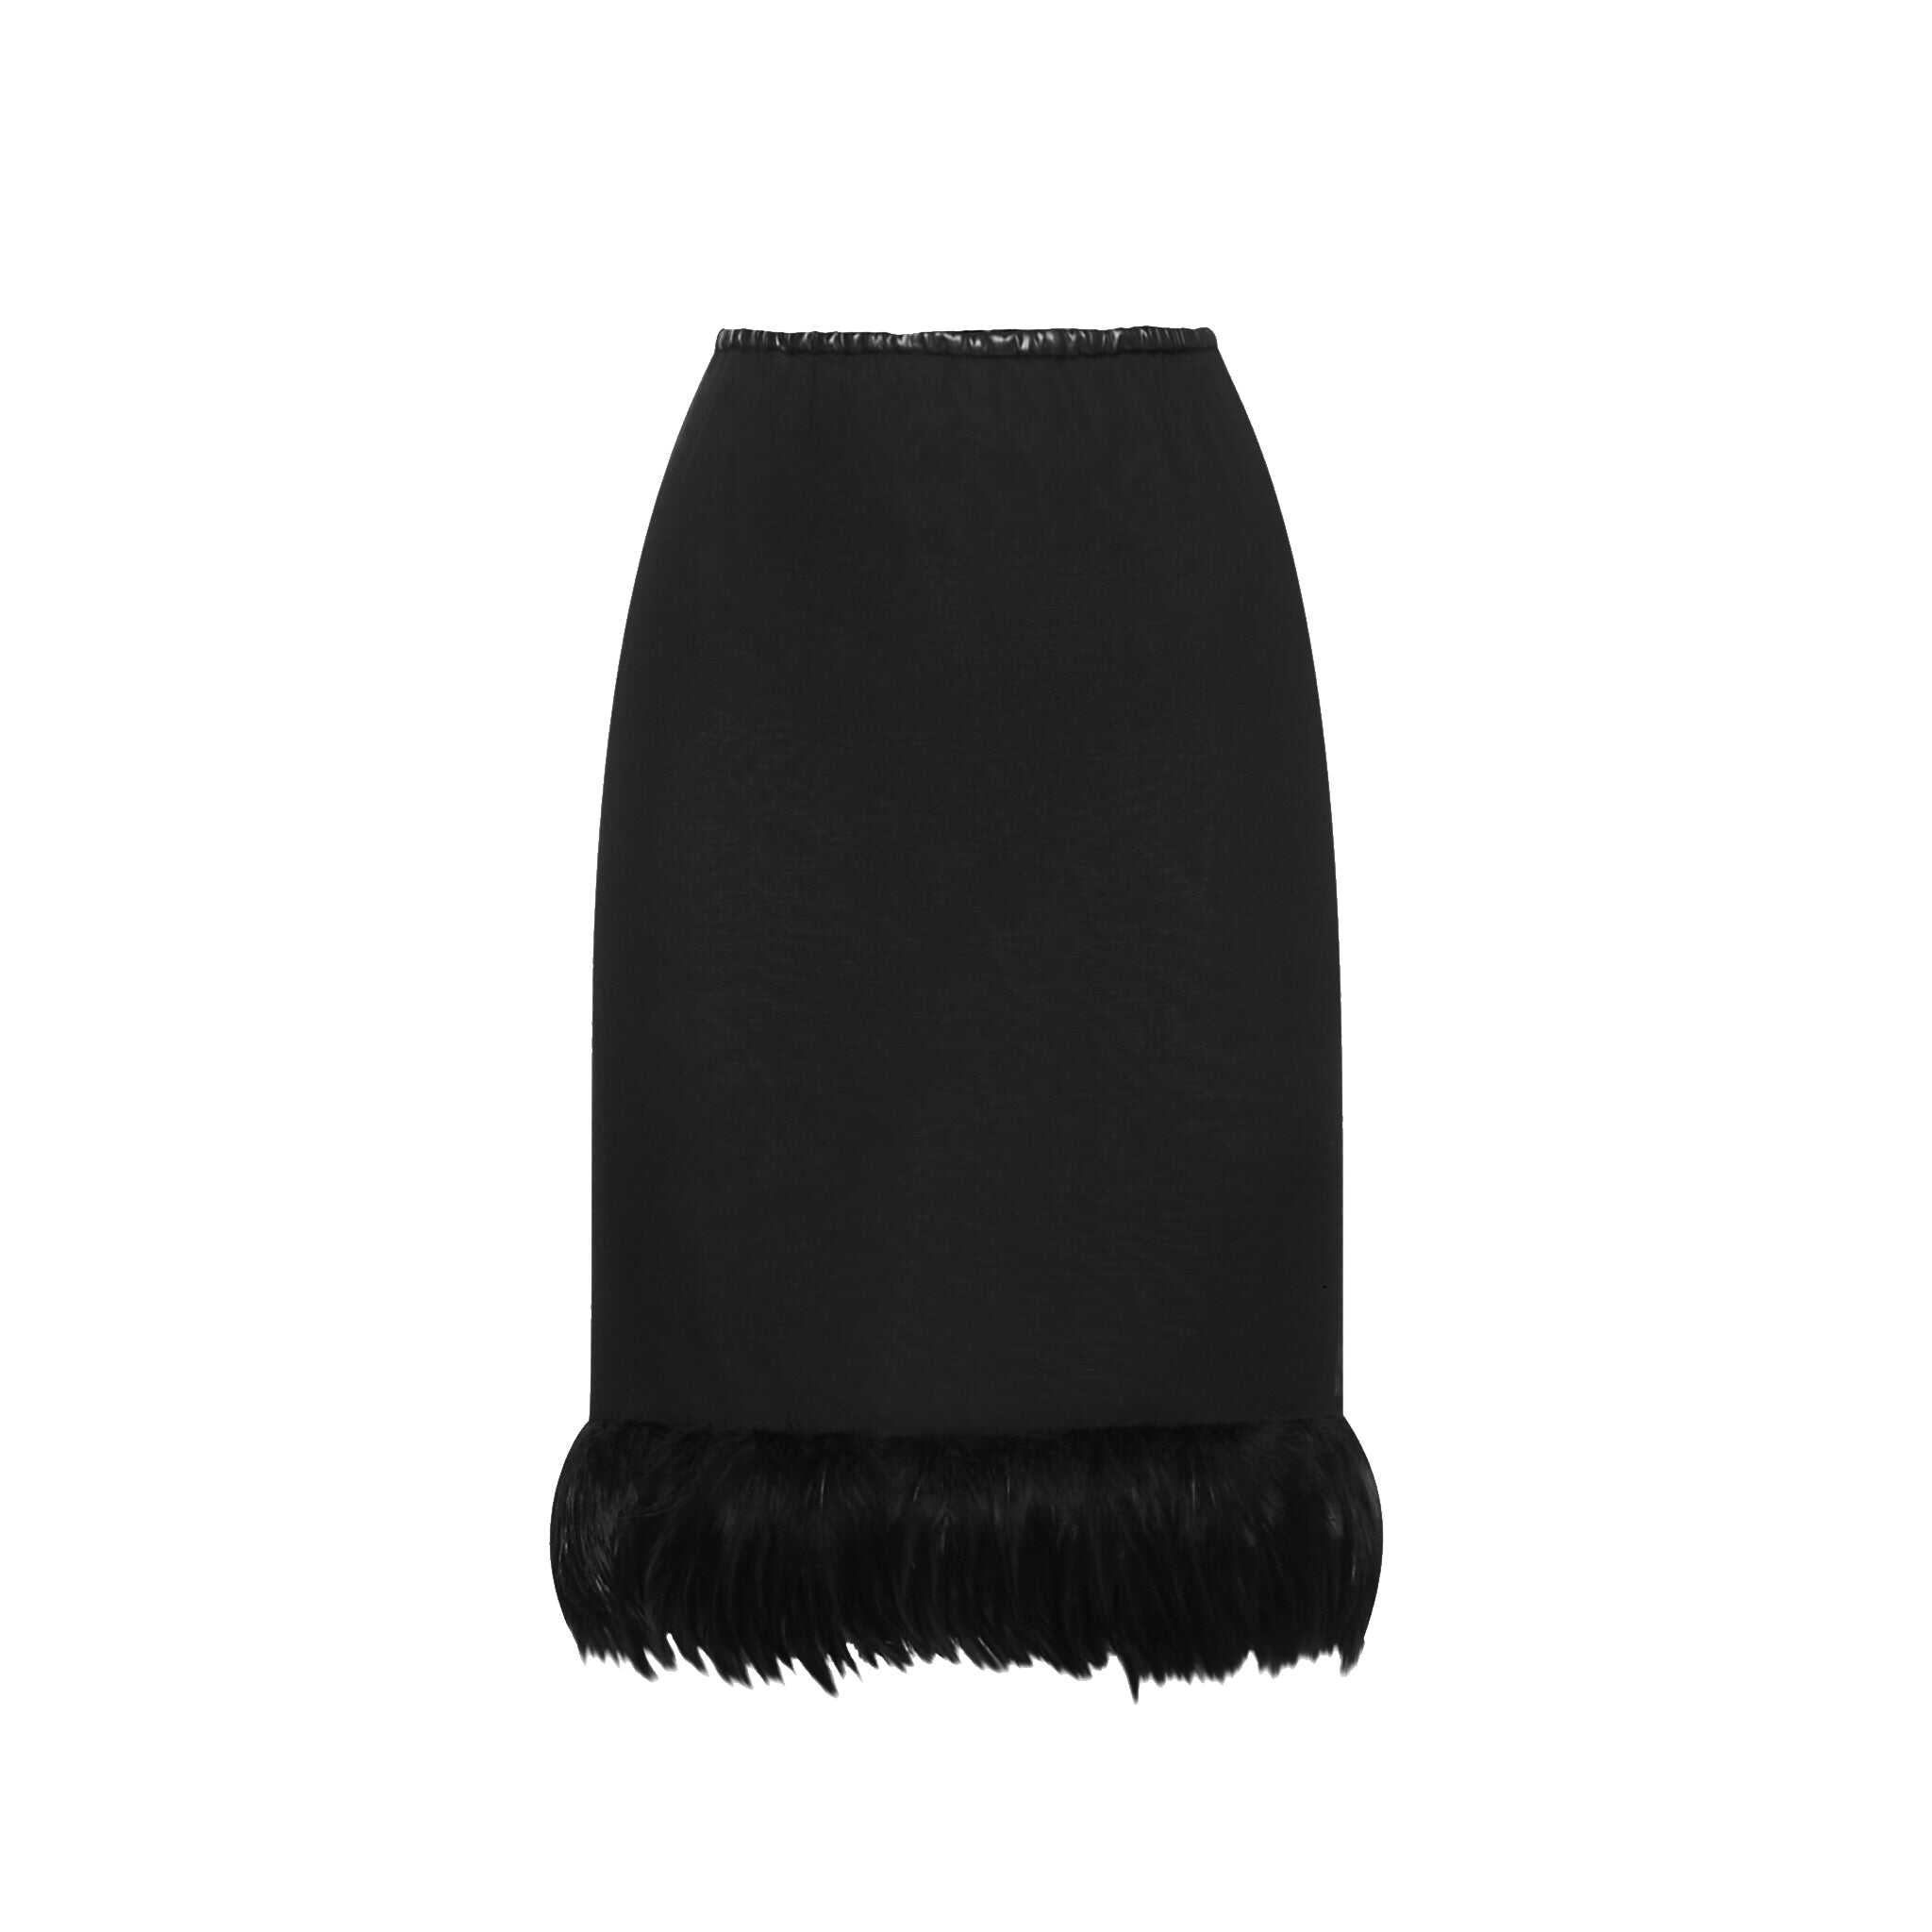 Poze Saint Laurent Feathers Trim Silk Skirt Black b-mall.ro 